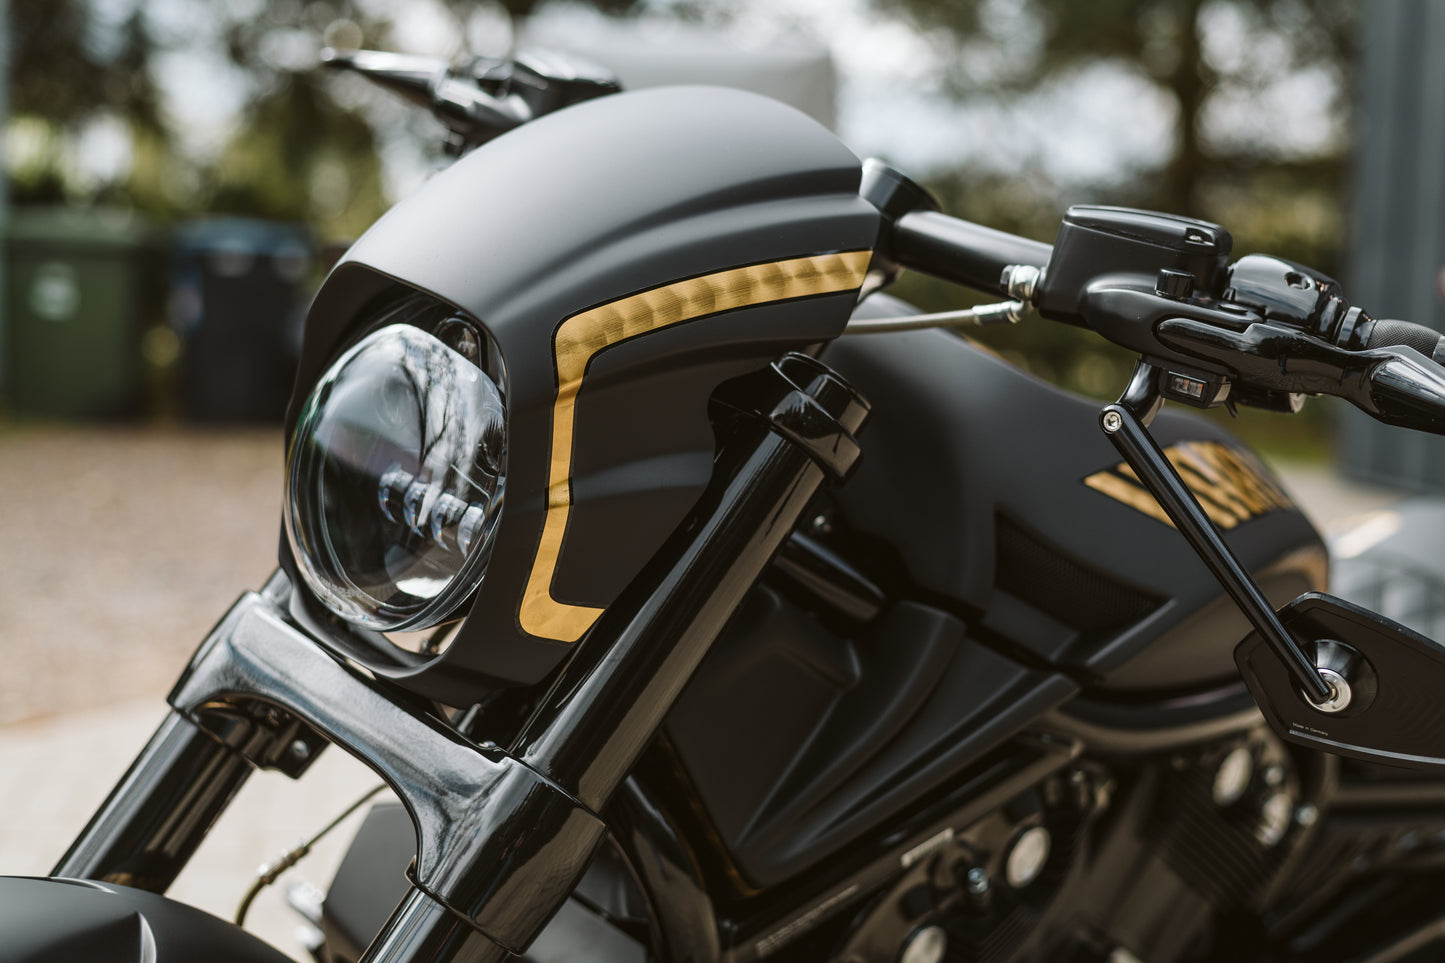 Zoomed Harley Davidson motorcycle with Killer Custom "Aggressor" V-Rod headlight fairing blurry nature background